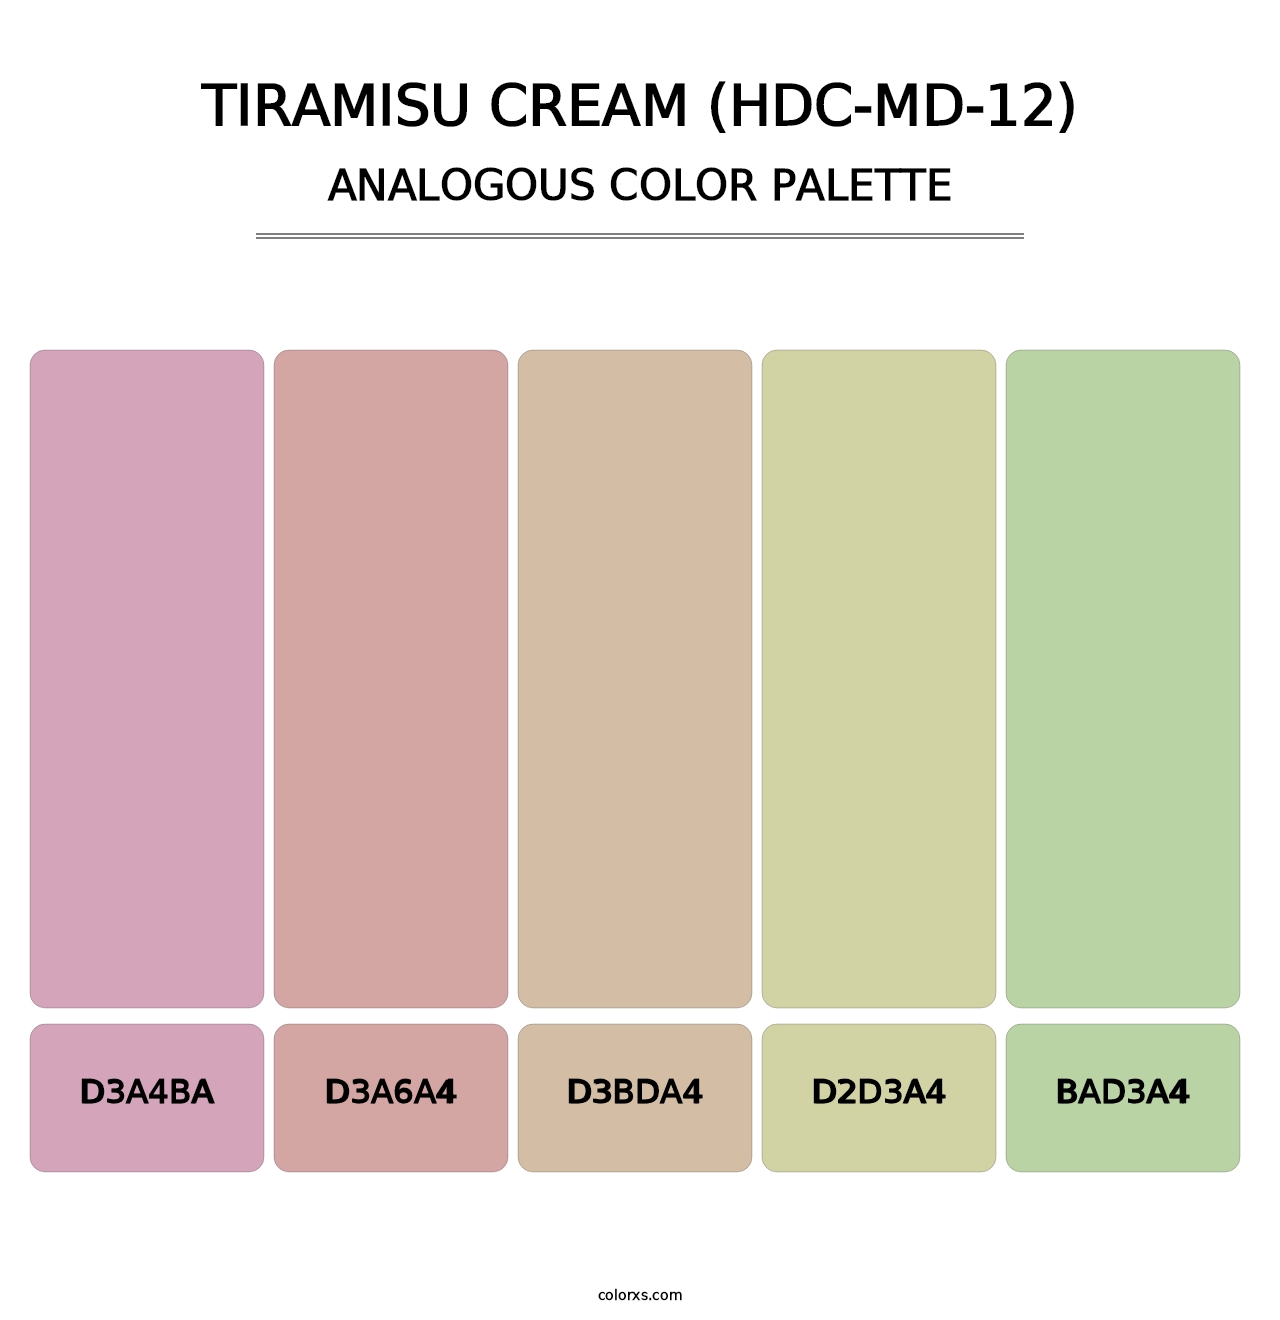 Tiramisu Cream (HDC-MD-12) - Analogous Color Palette